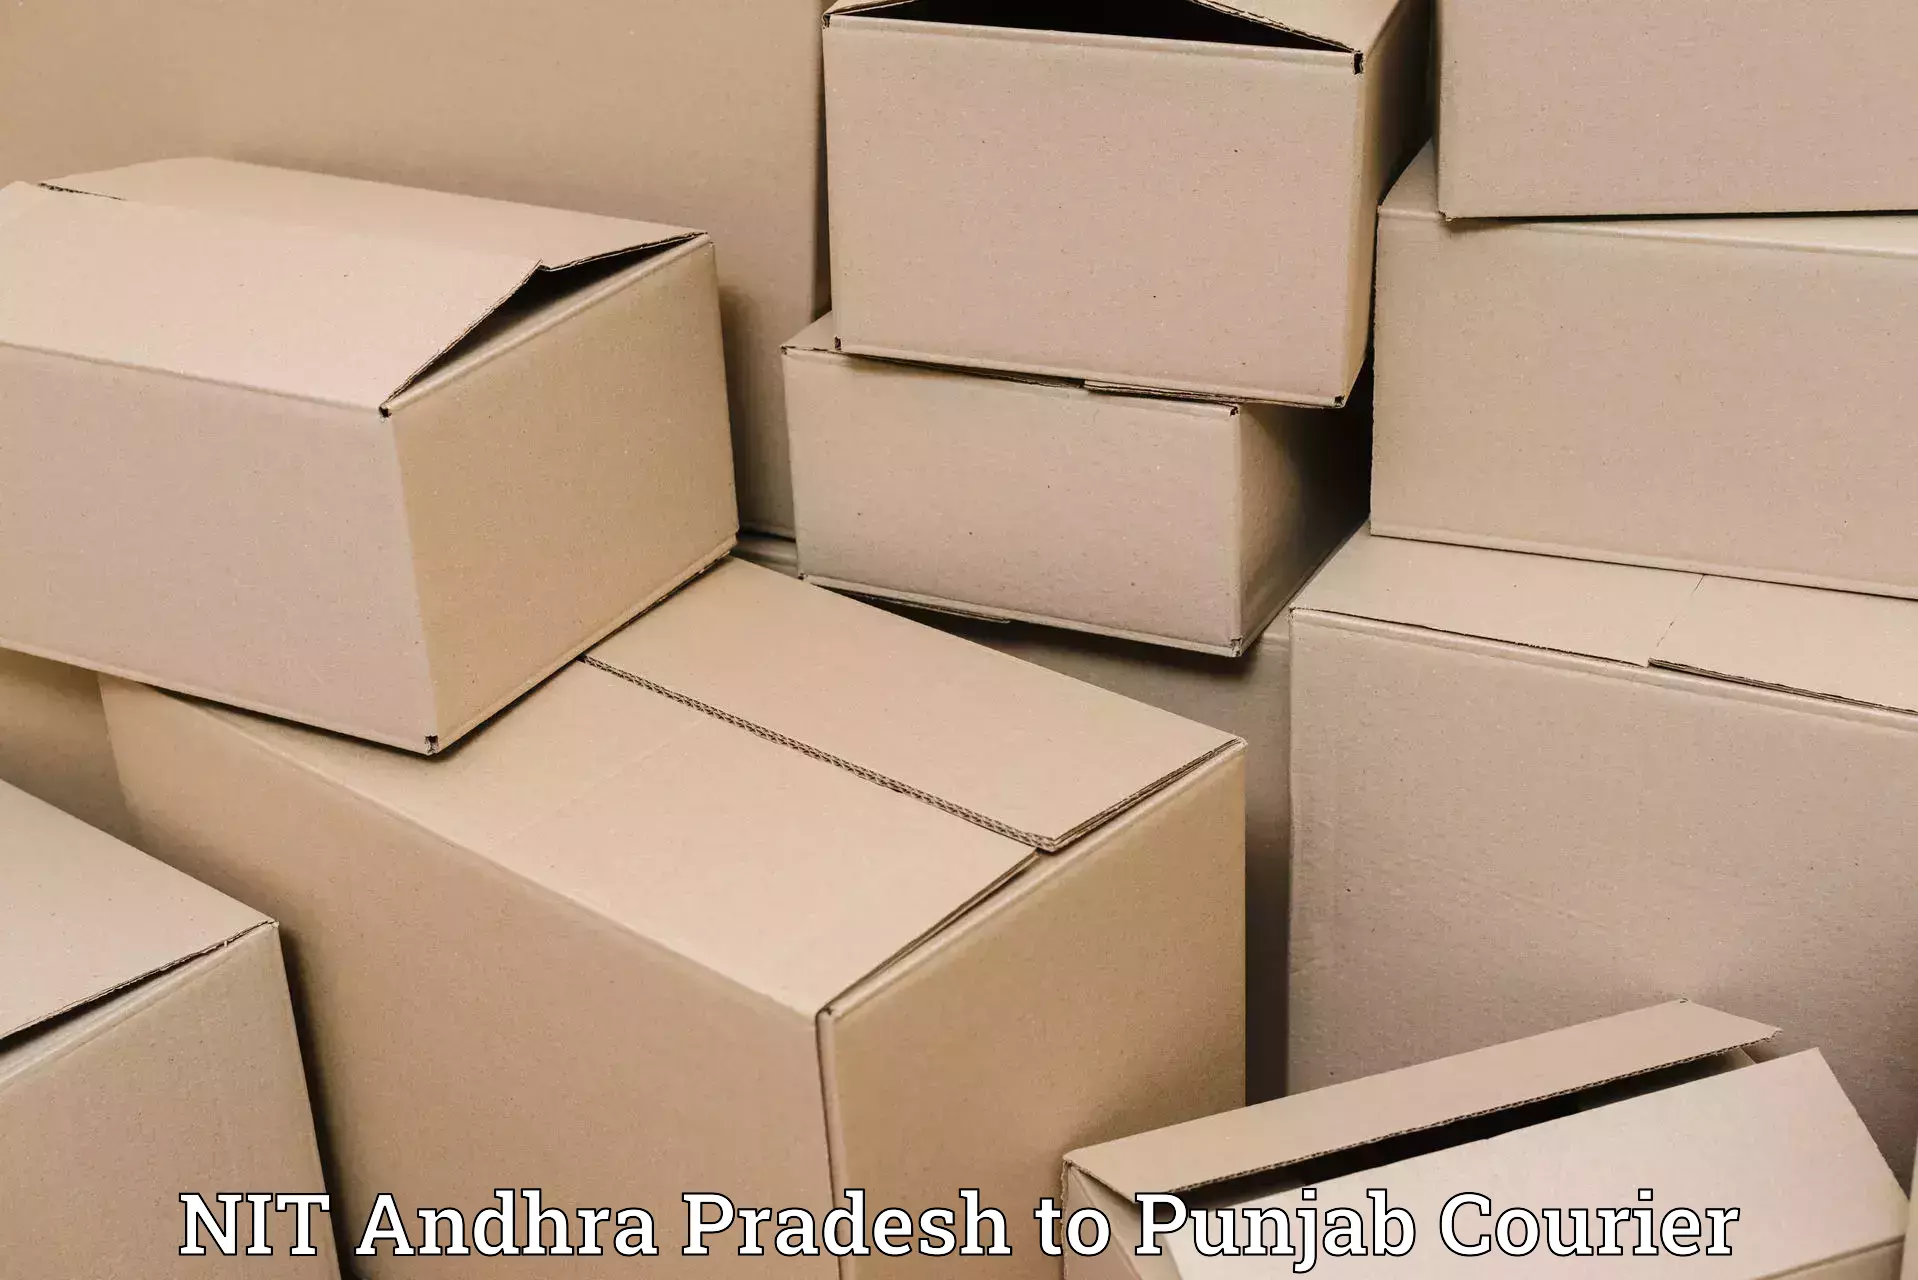 Courier service partnerships in NIT Andhra Pradesh to Anandpur Sahib